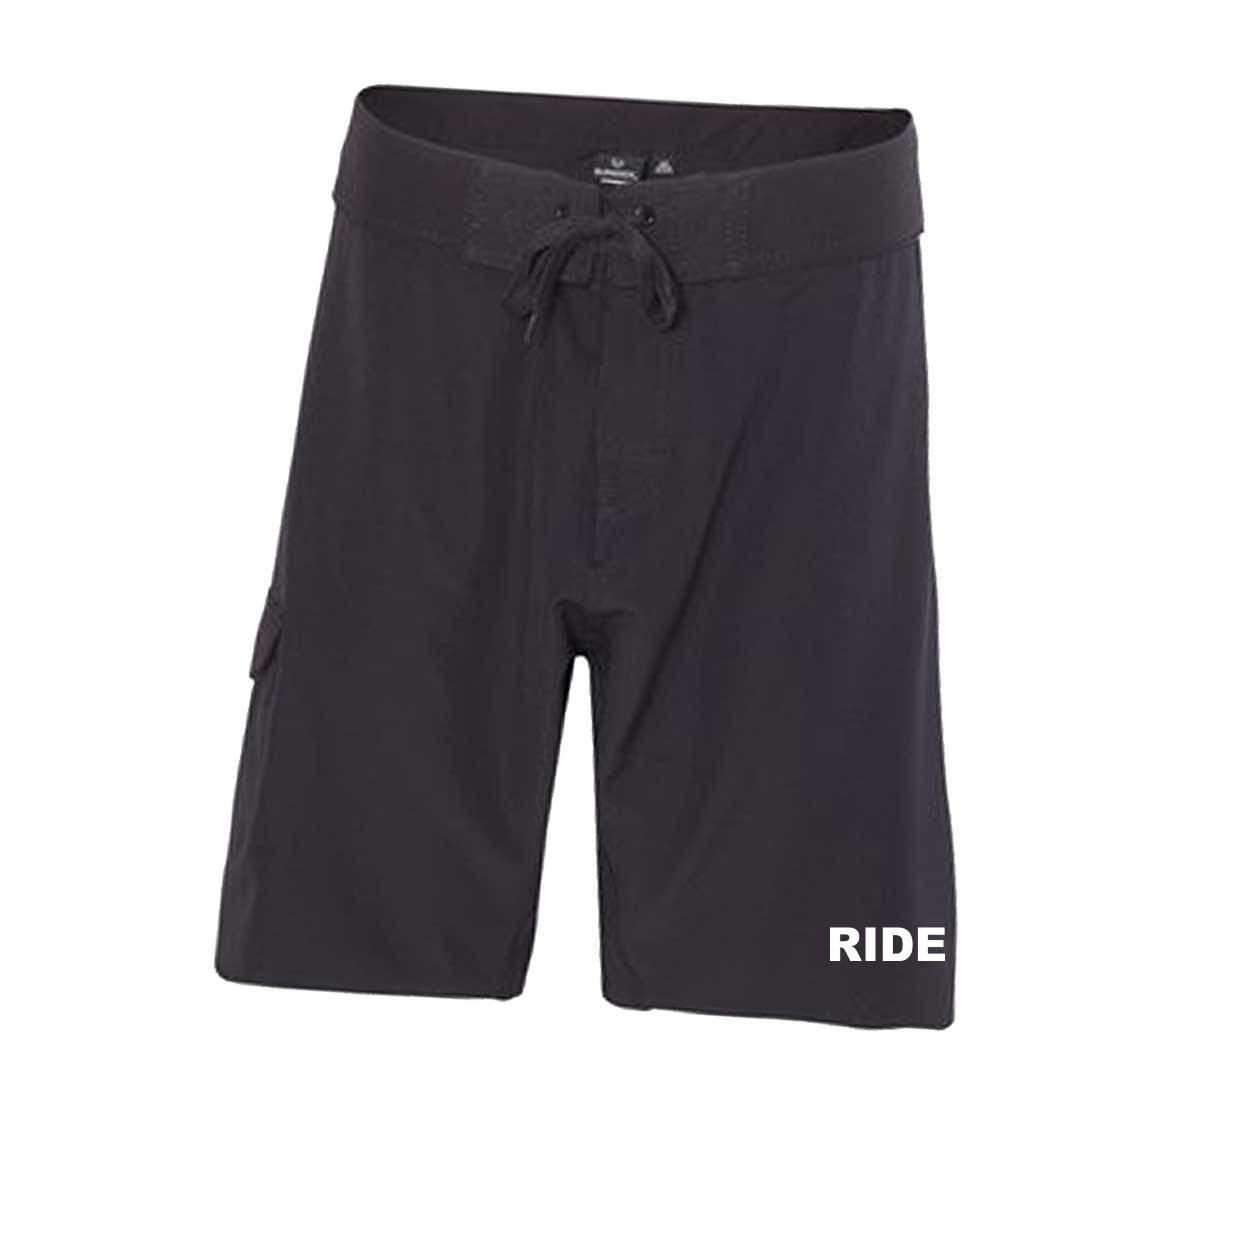 Ride Brand Logo Classic Men's Unisex Boardshorts Swim Trunks Black (White Logo)